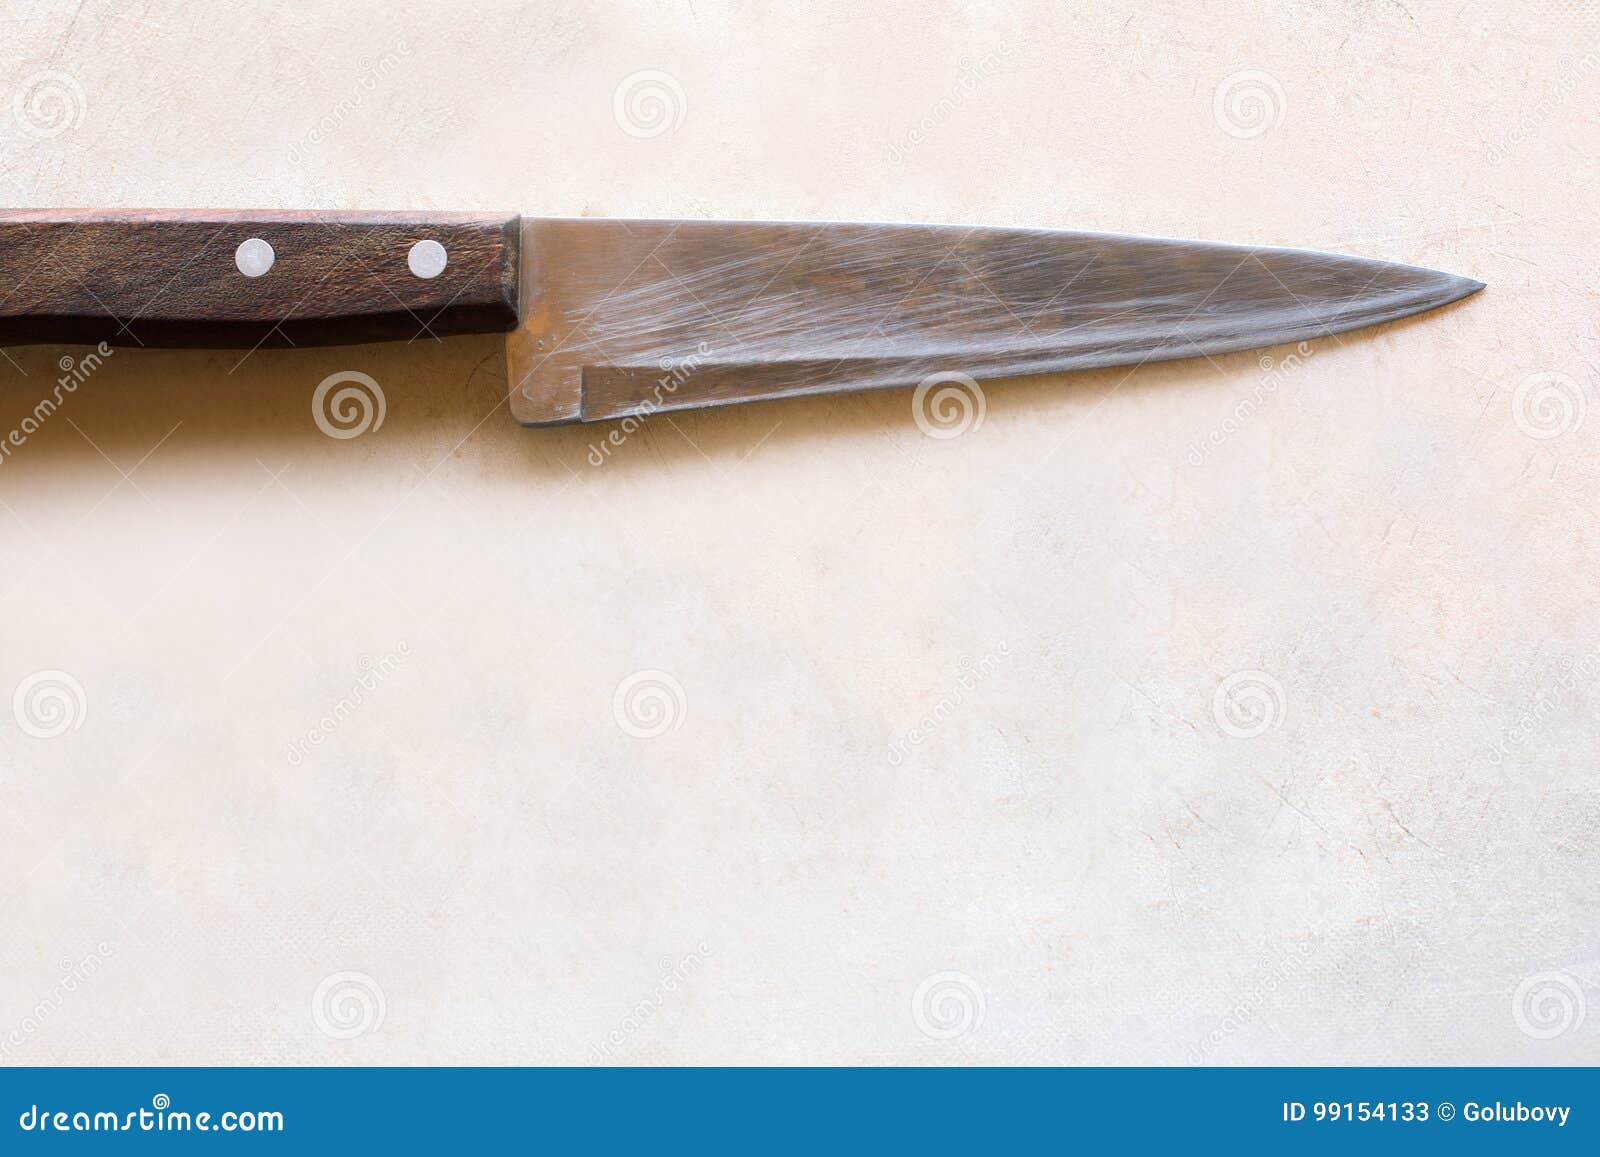 Почему оставляют нож на столе. Нож на столе. Ножик на столе. Нож лежит на столе. Стол нож доска.